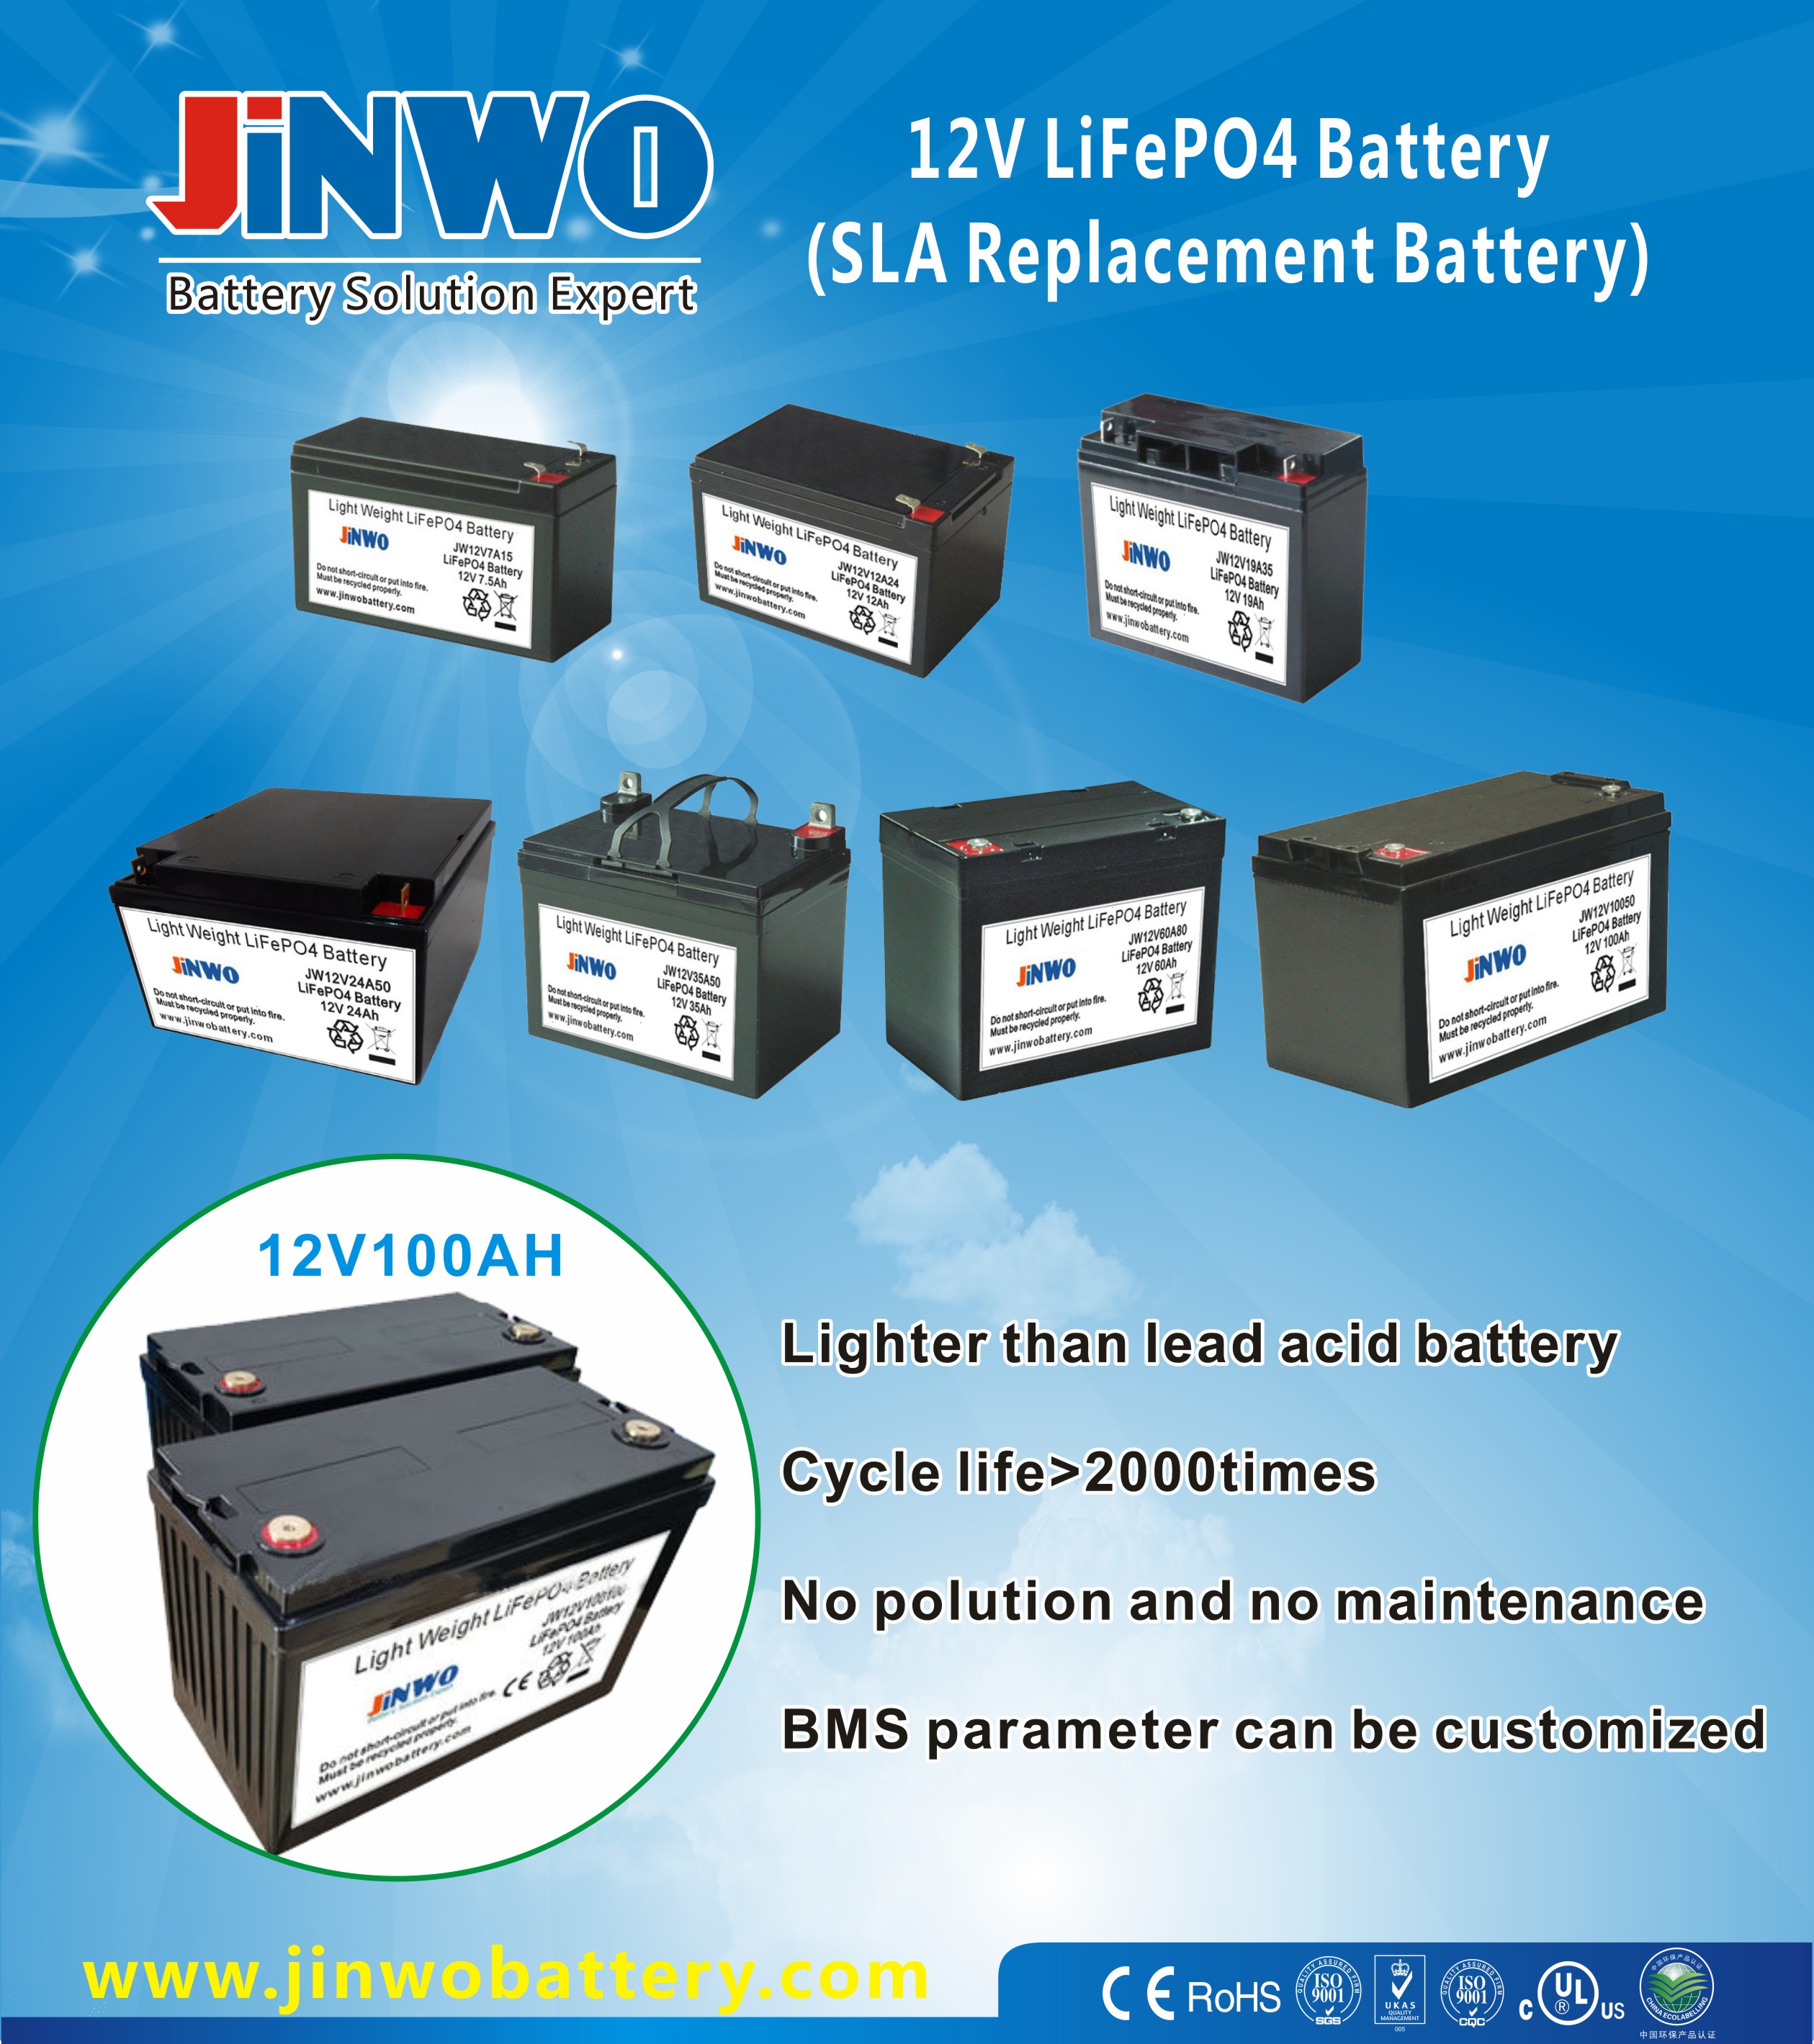 LFP 12V | Lithium Ion Battery | LiFePO4 Battery